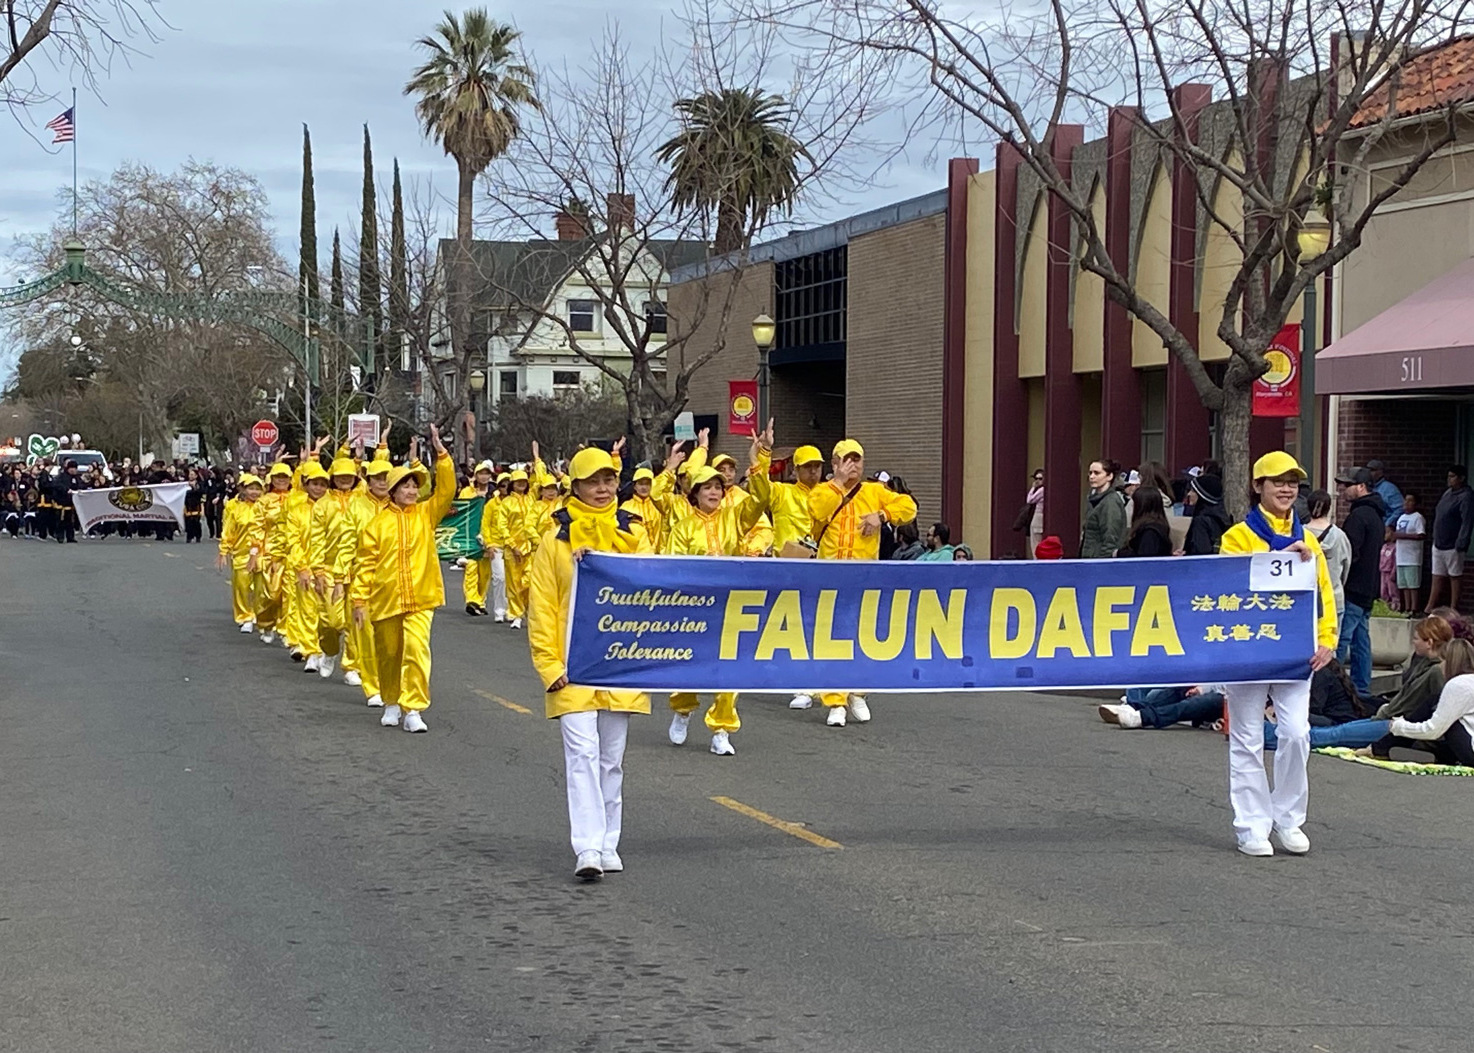 Image for article Каліфорнія, США. Група Фалунь Дафа бере участь у фестивалі Бок Кай у Мерісвілі